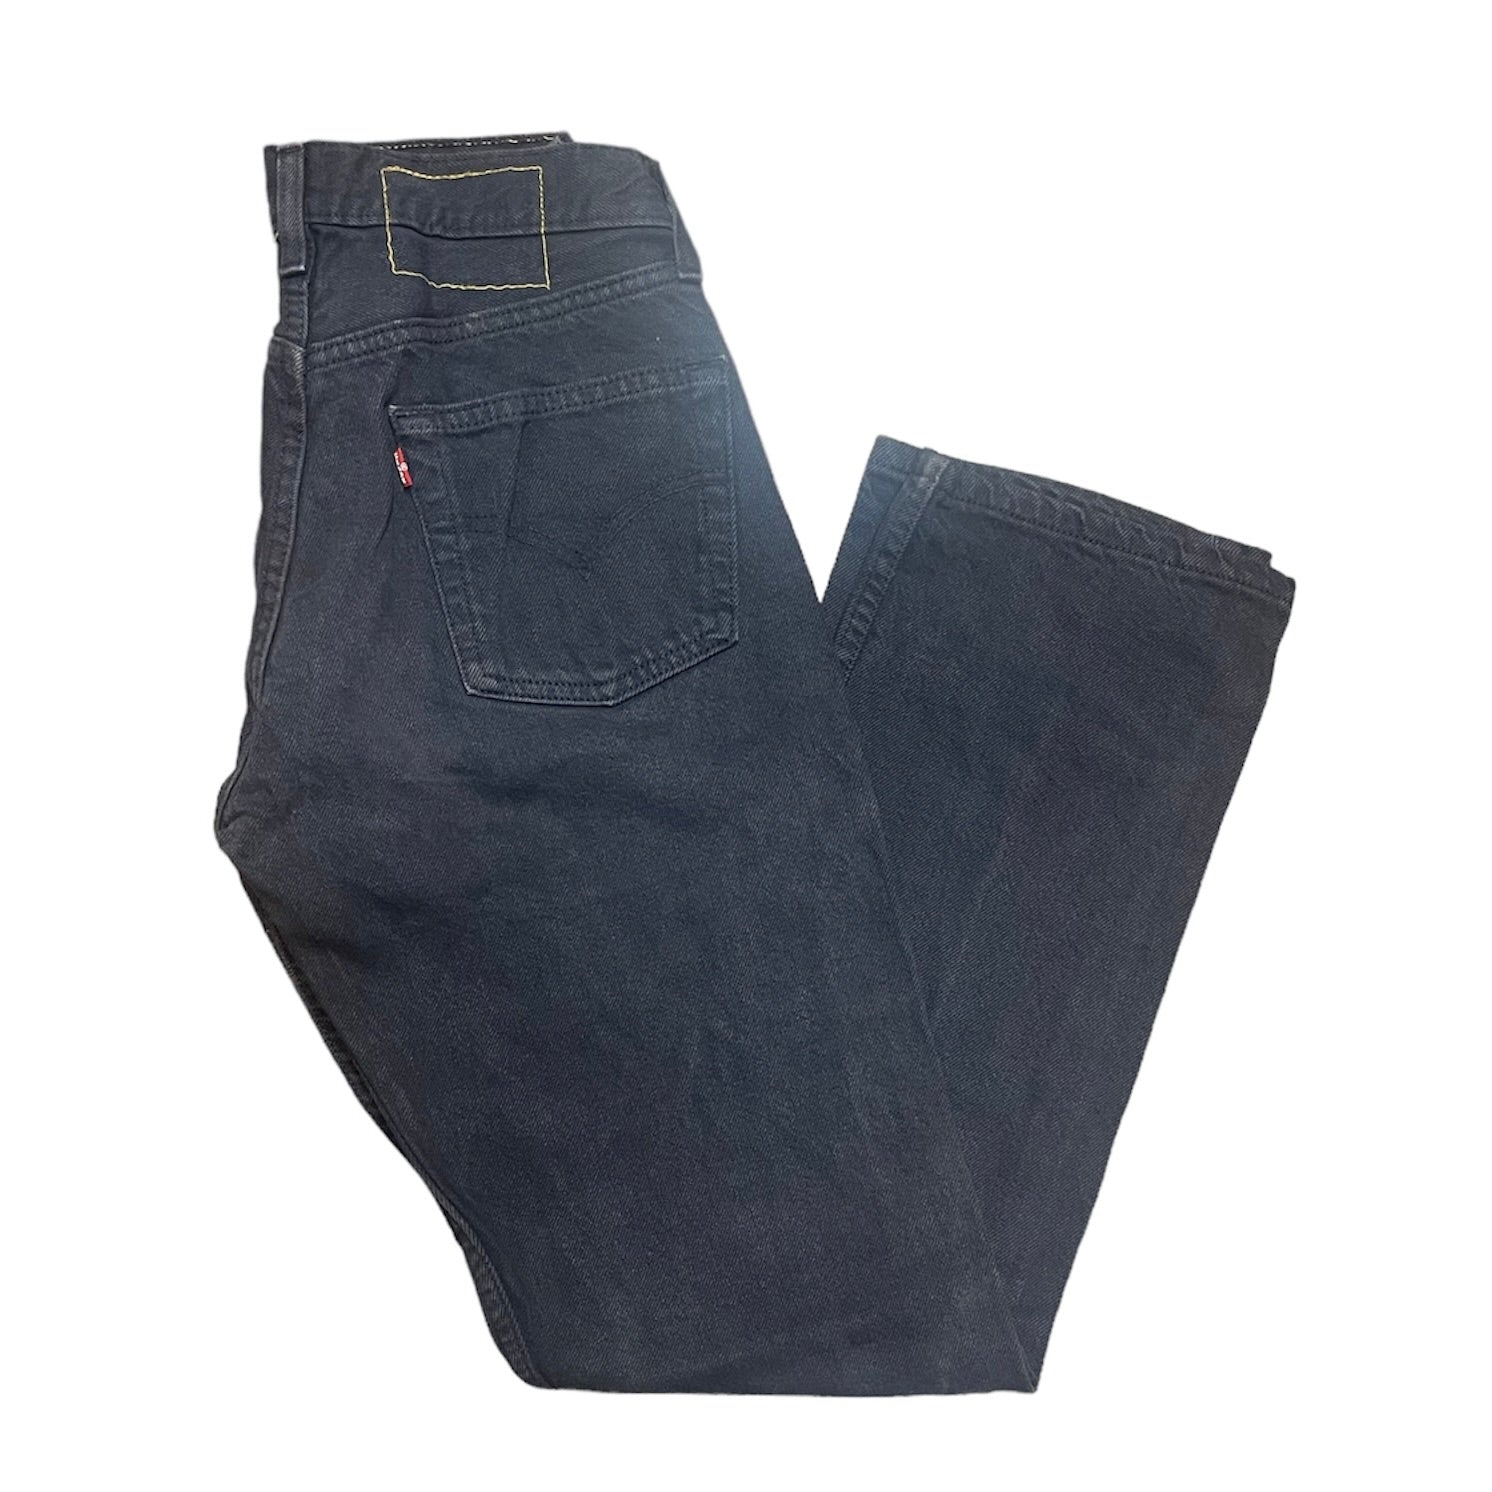 Vintage Levis 501 Indigo Jeans